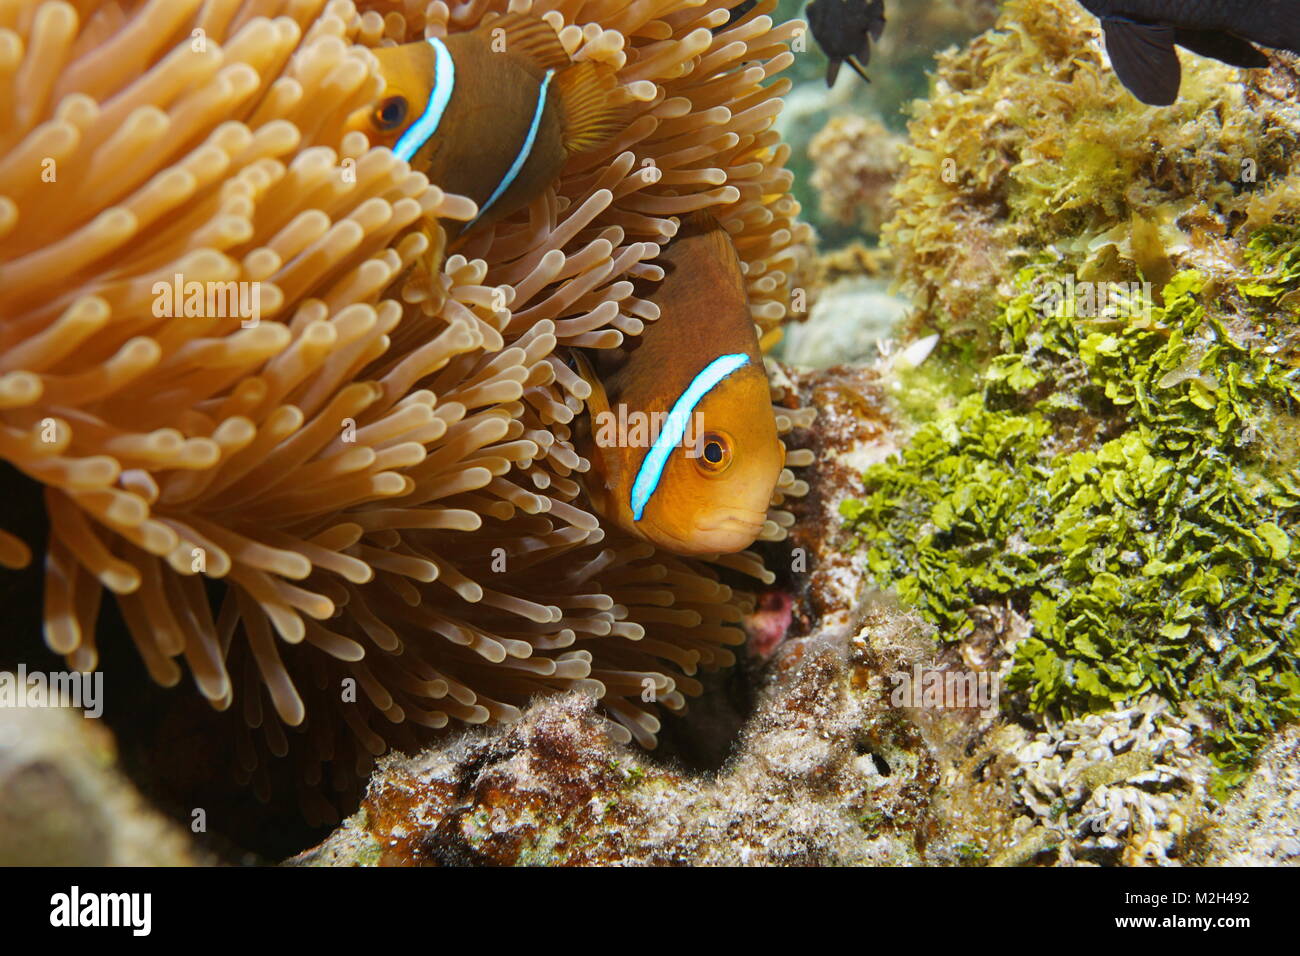 Tropical fish orange-fin anemonefish, Amphiprion chrysopterus, hidden in sea anemone tentacles, underwater Pacific ocean, Rarotonga, Cook islands Stock Photo